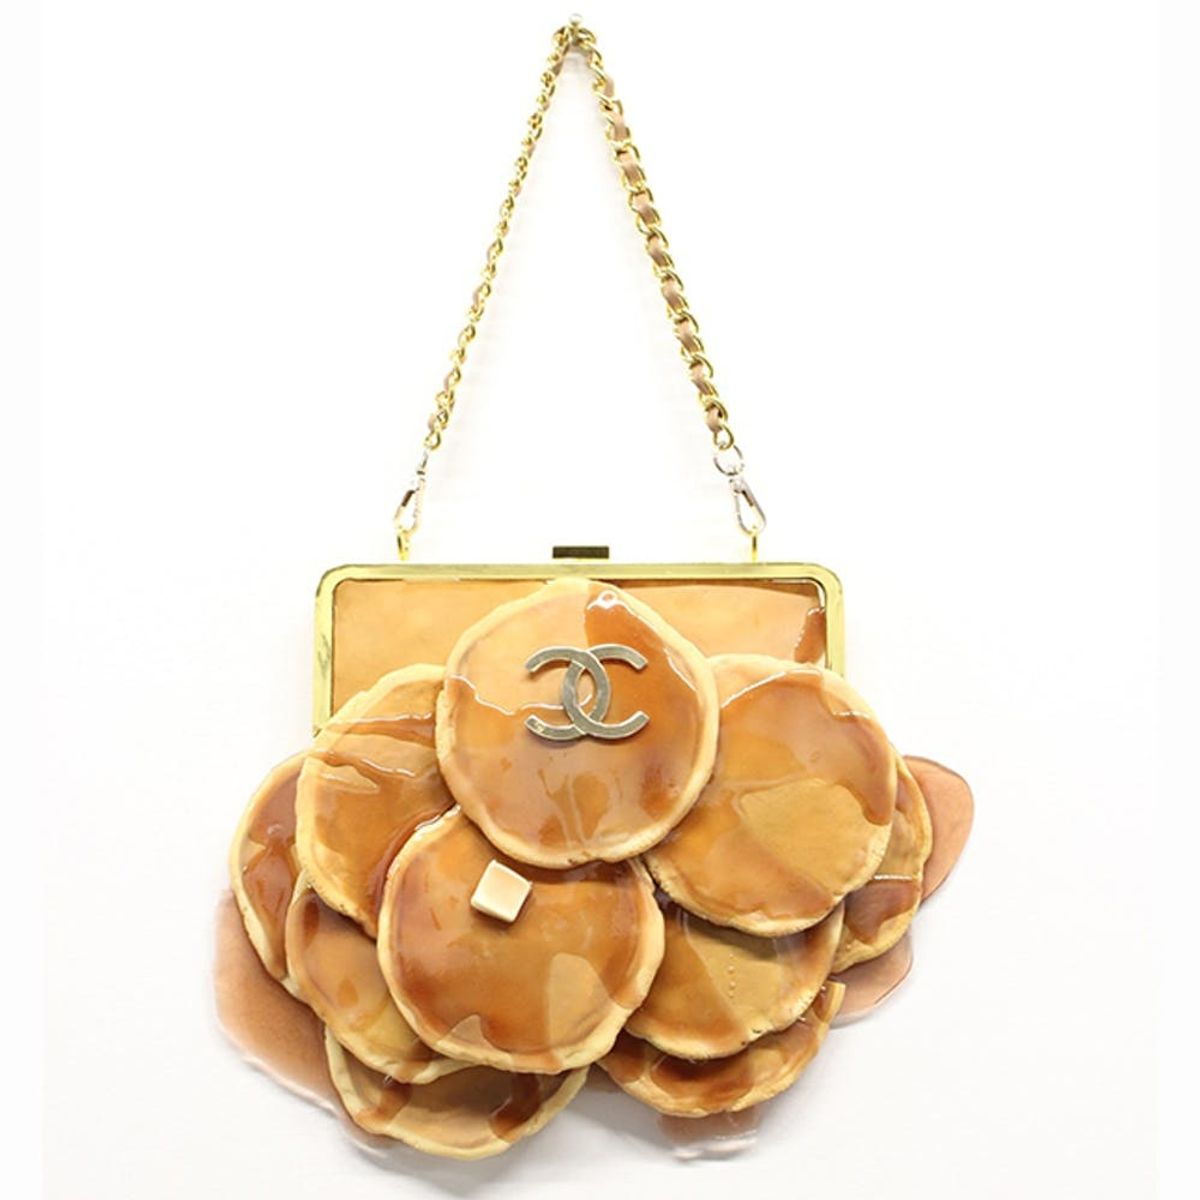 Bagels and Bread + Designer Bags = This Delicious Art Exhibit